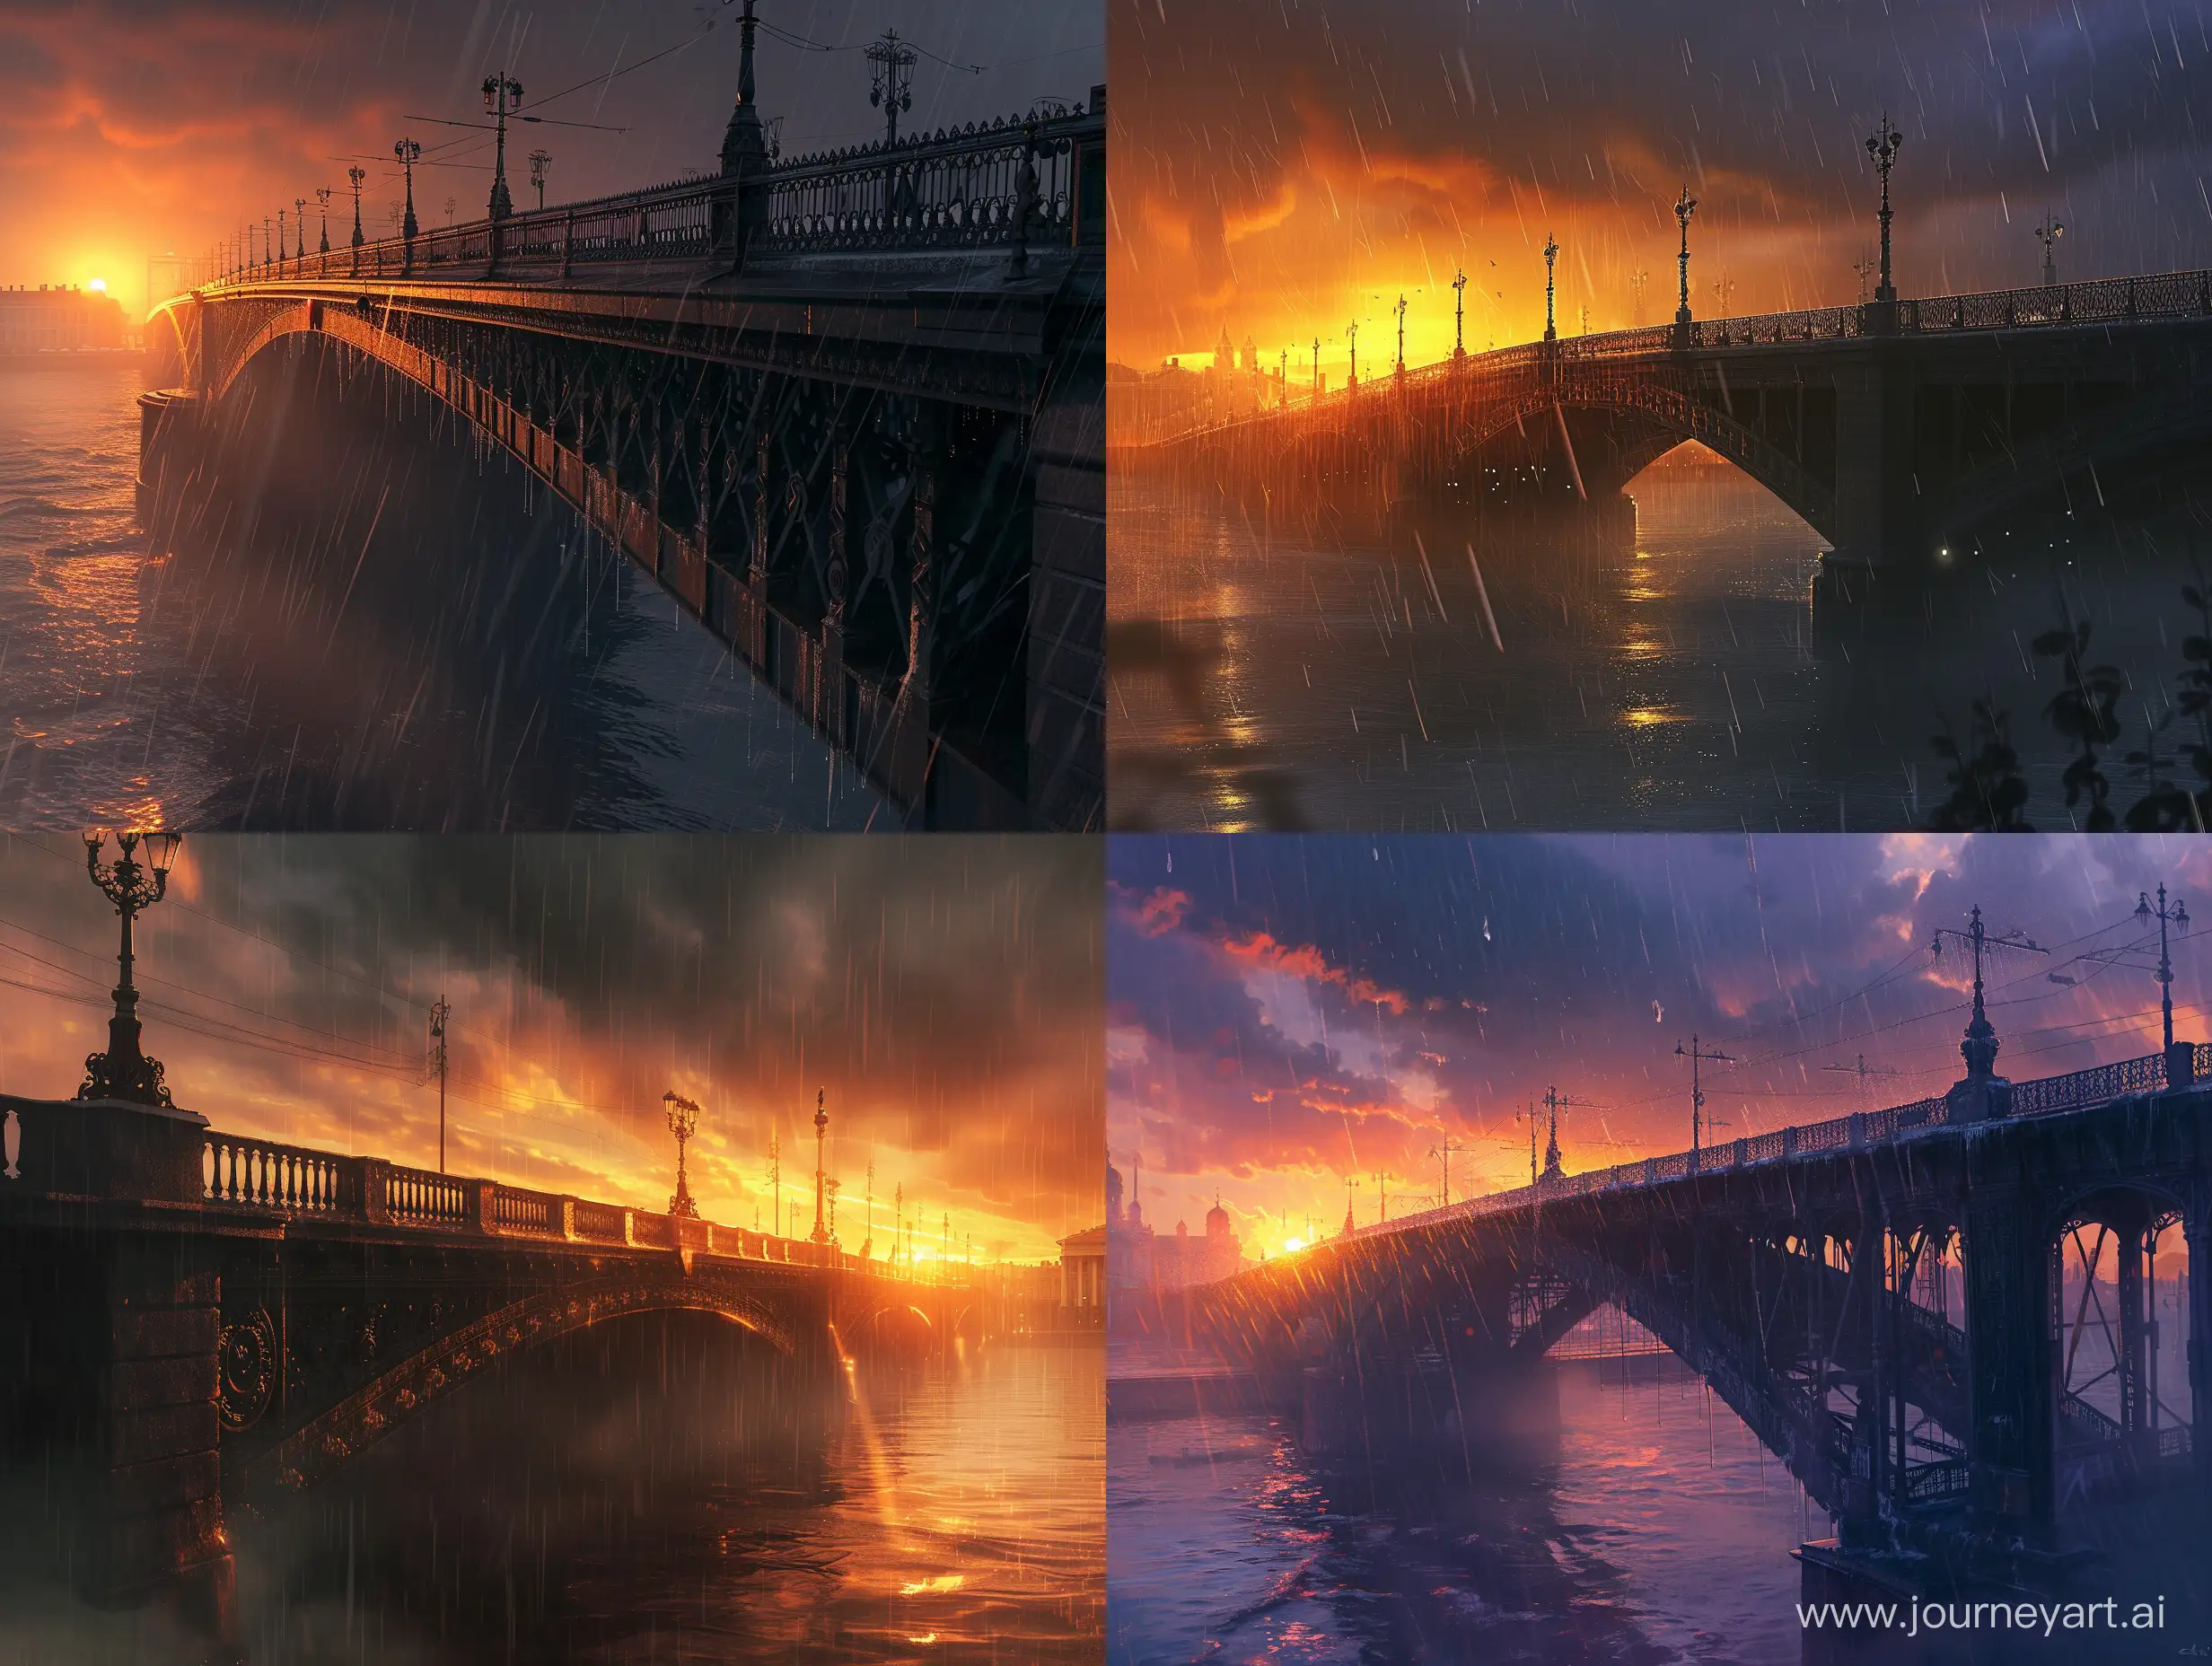 Rainy-Sunset-at-Saint-Petersburgs-Anichkov-Bridge-with-HyperDetailed-Cinematic-Lighting